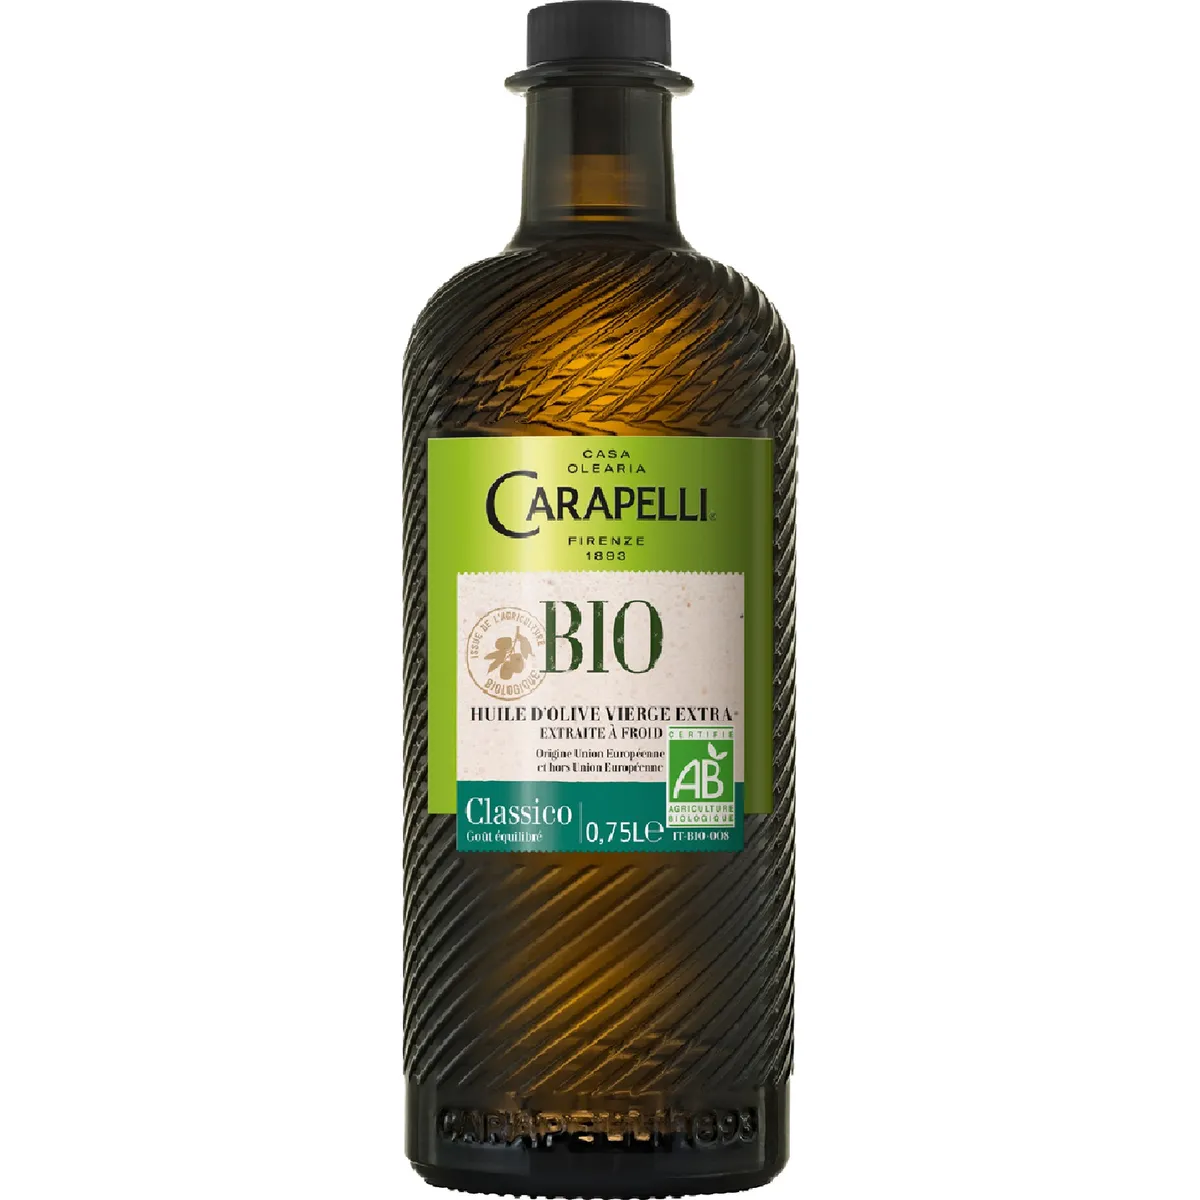 huile d'olive vierge  extra classico  carapelli